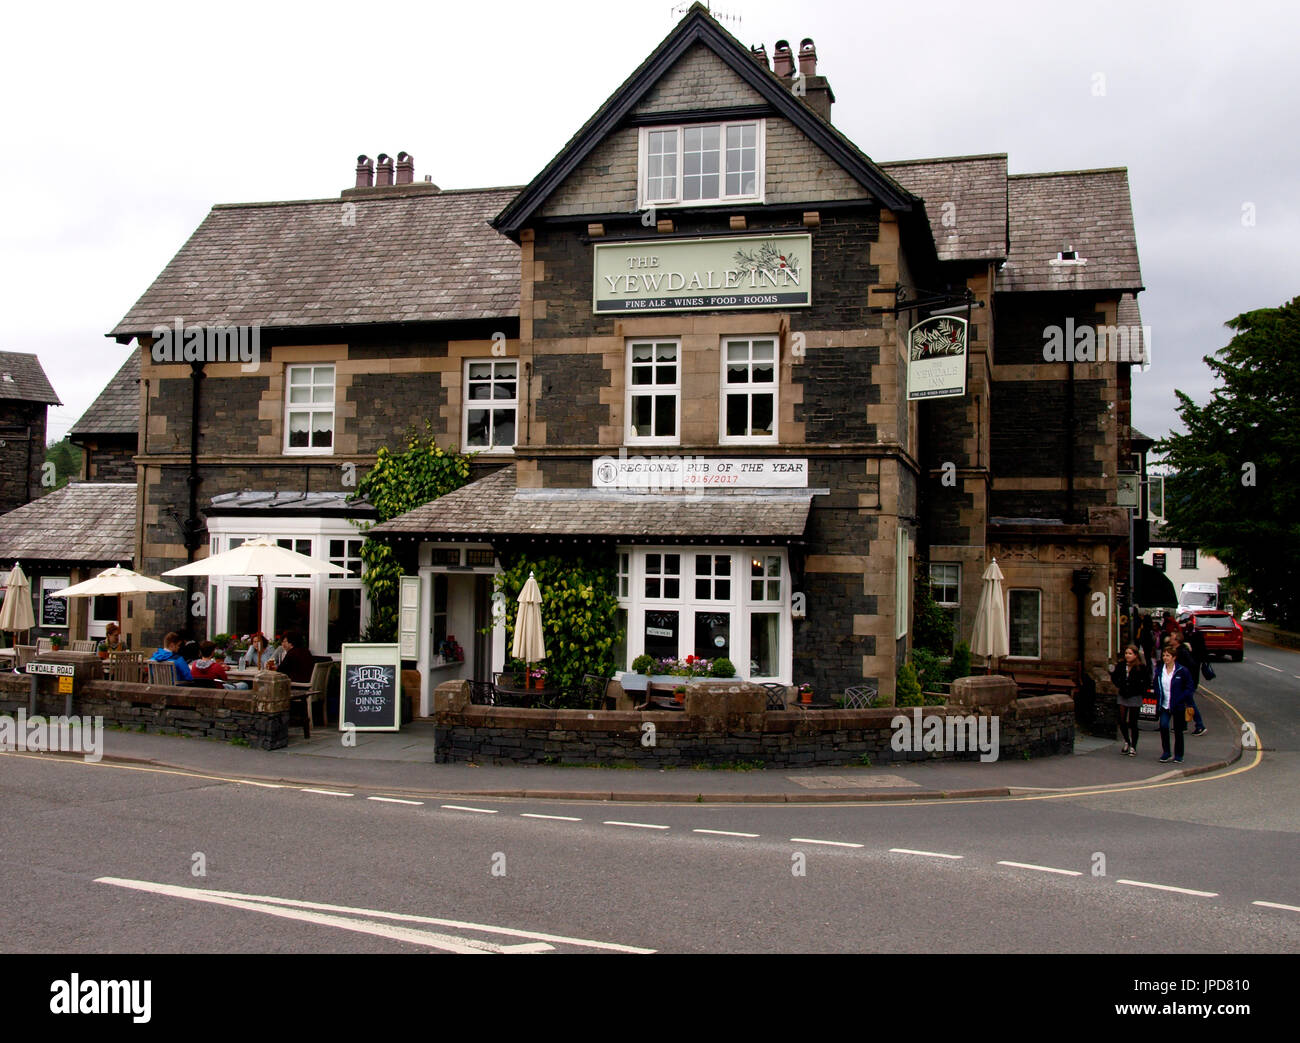 L'yewdale inn, Coniston, Lake District, Cumbria, Royaume-Uni Banque D'Images